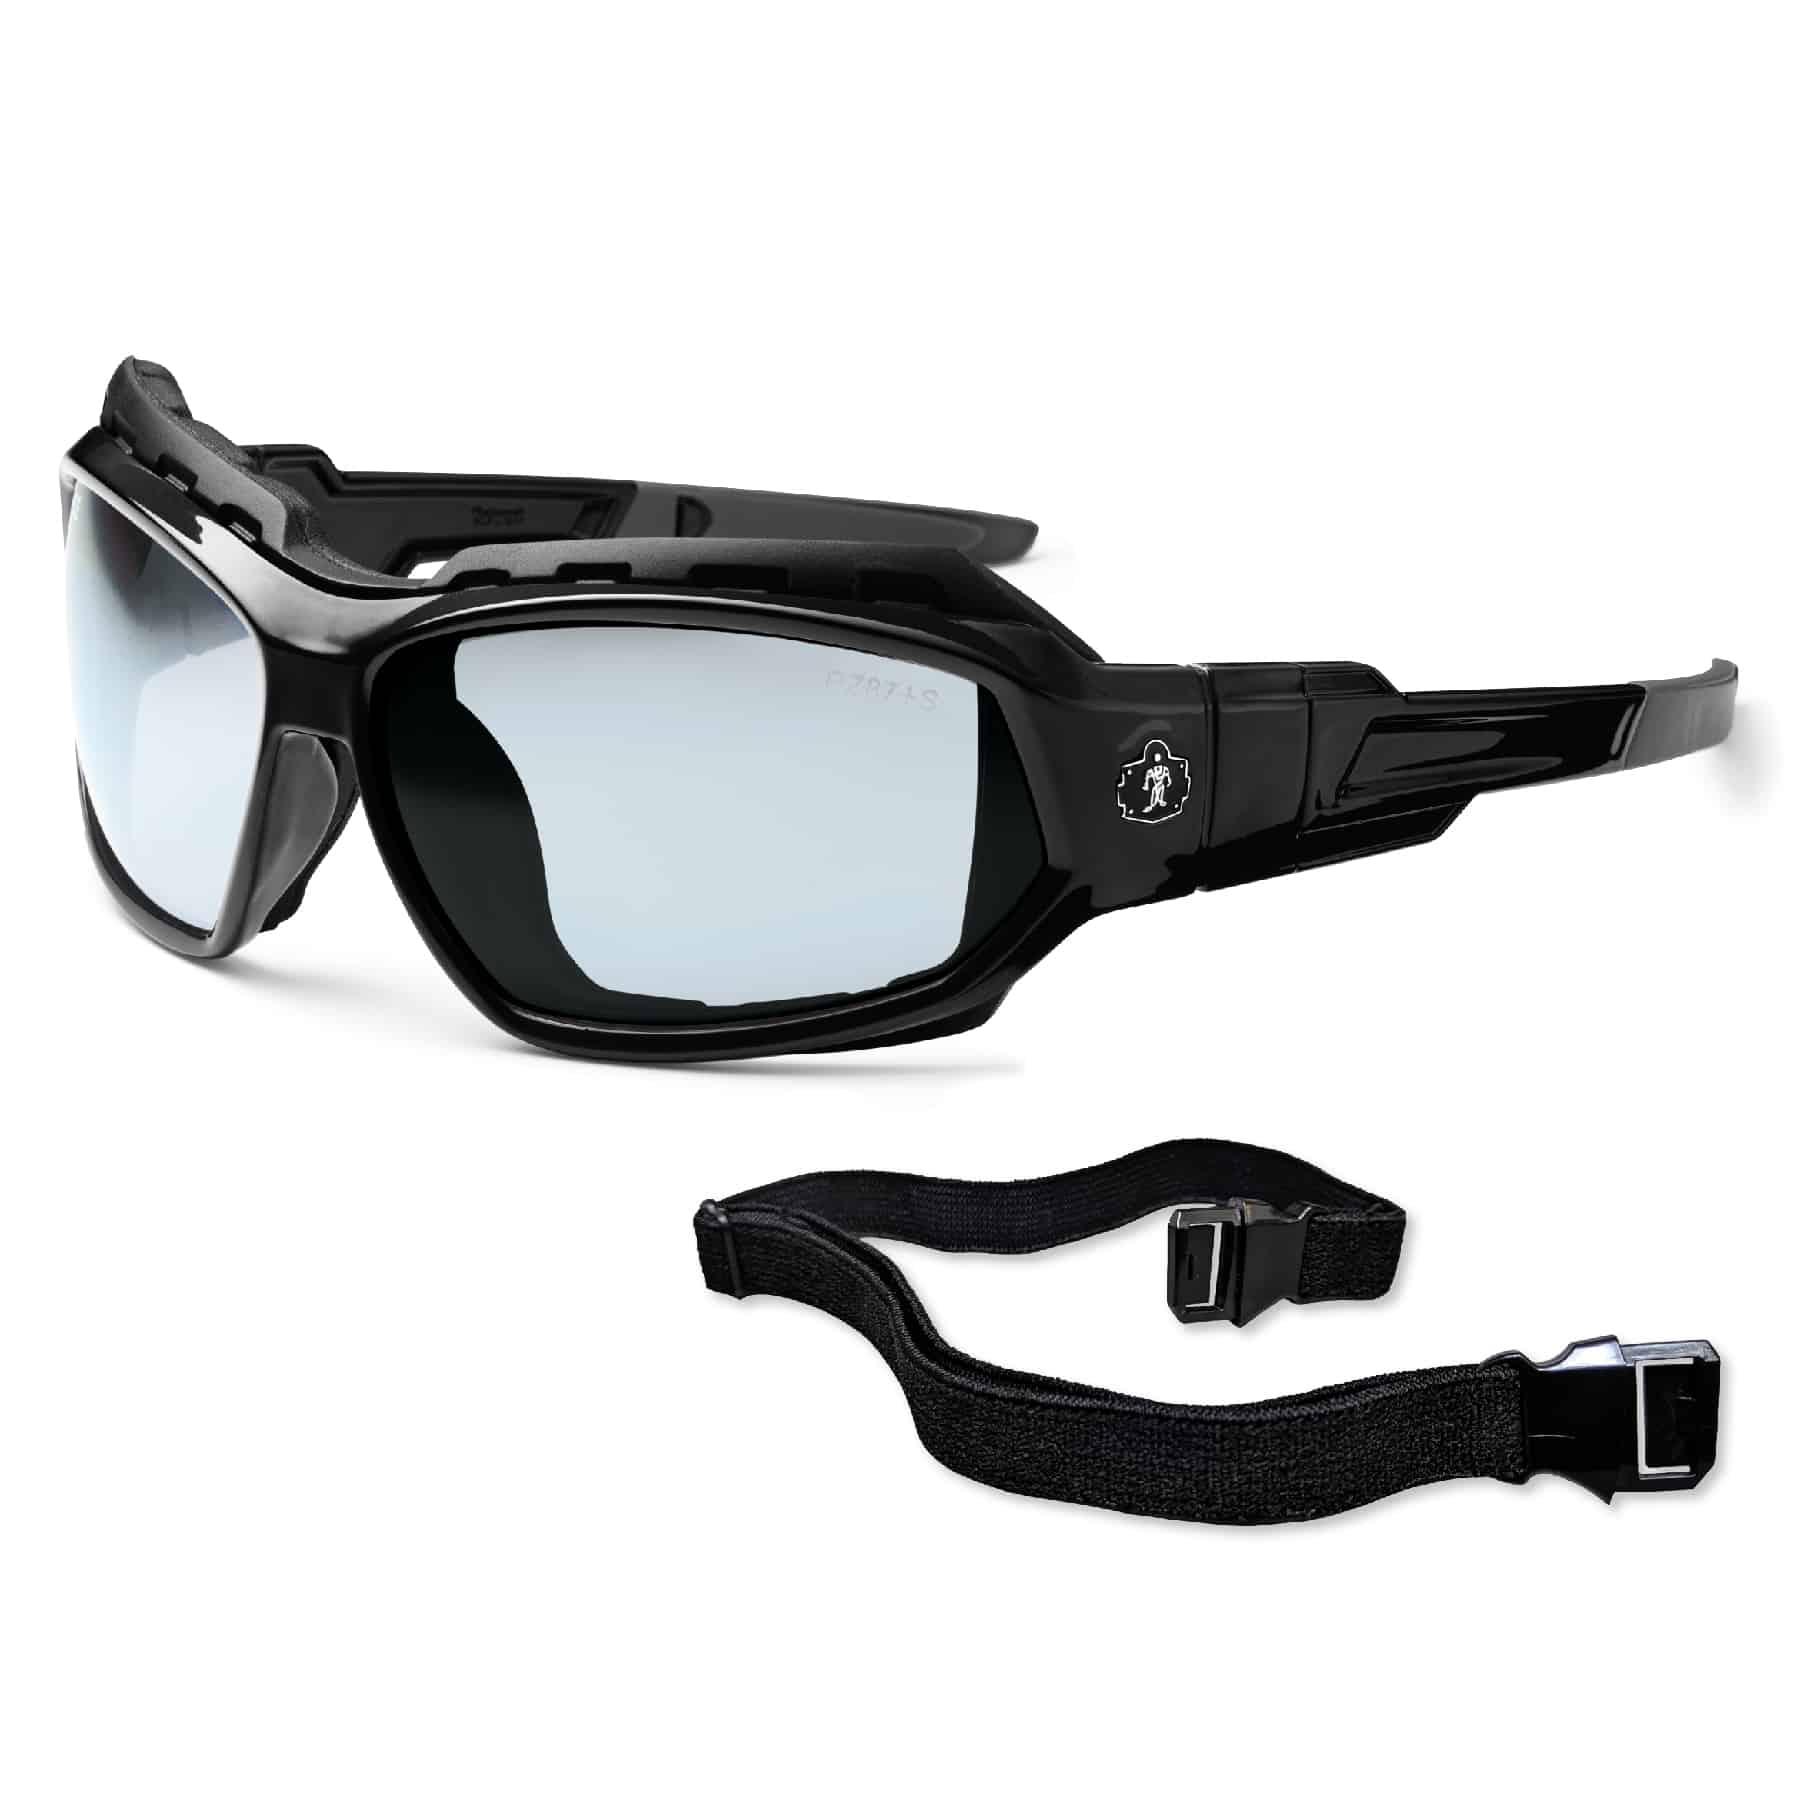 Ergodyne SkullerzÂ® Loki Safety Glasses // Sunglasses, Black, Anti-Fog In/Outdoor Lens - image 1 of 6